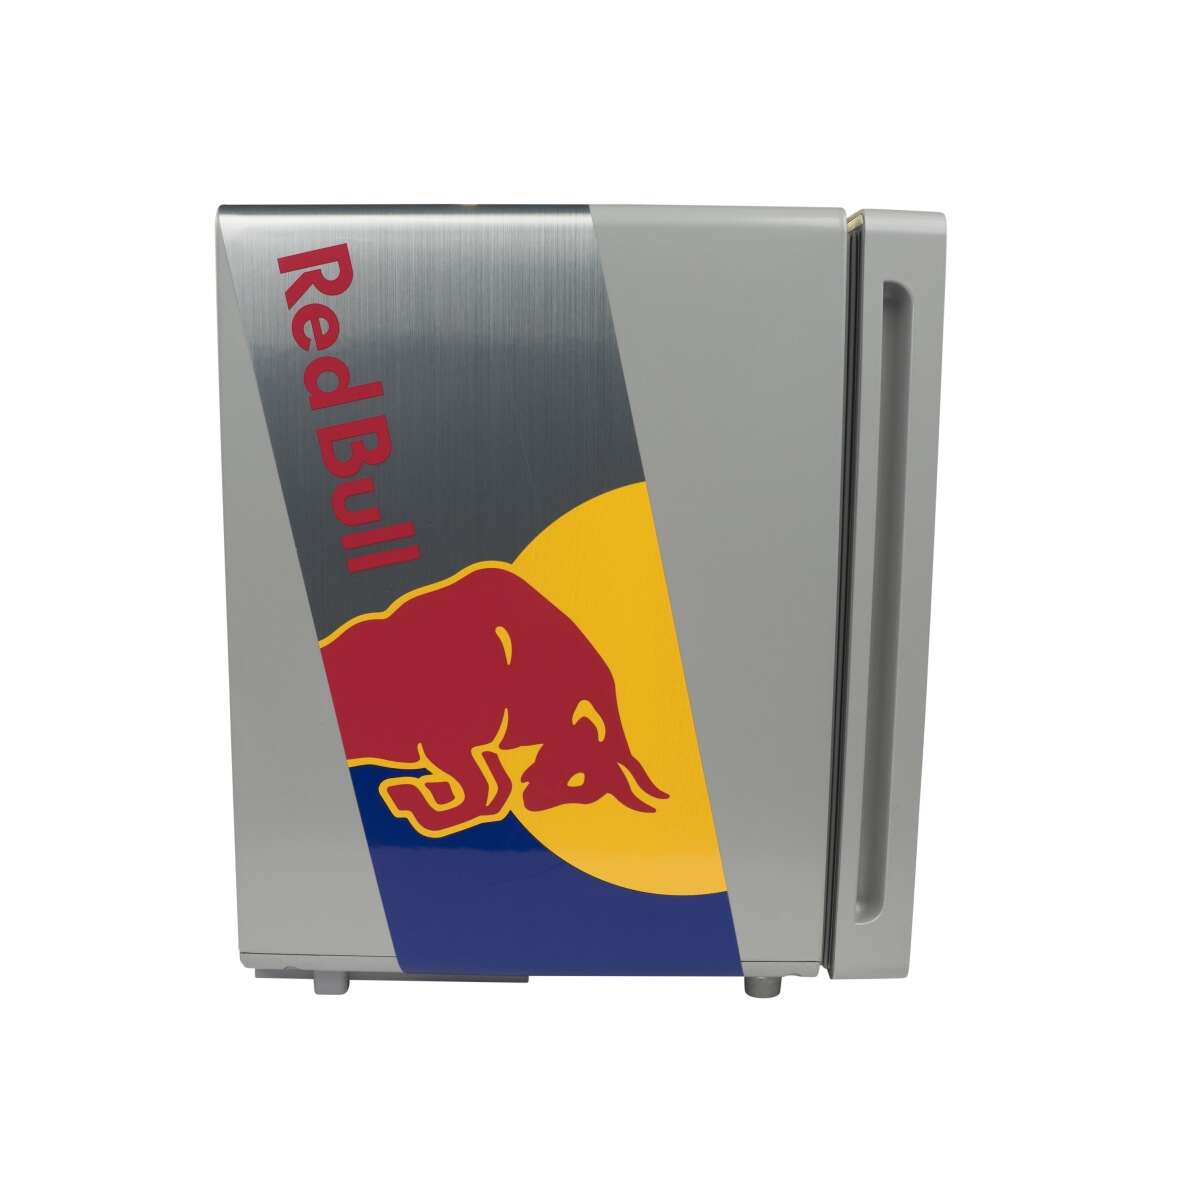 Red Bull Kühlschrank Baby Cooler Eco LED Canton Thurgovie 